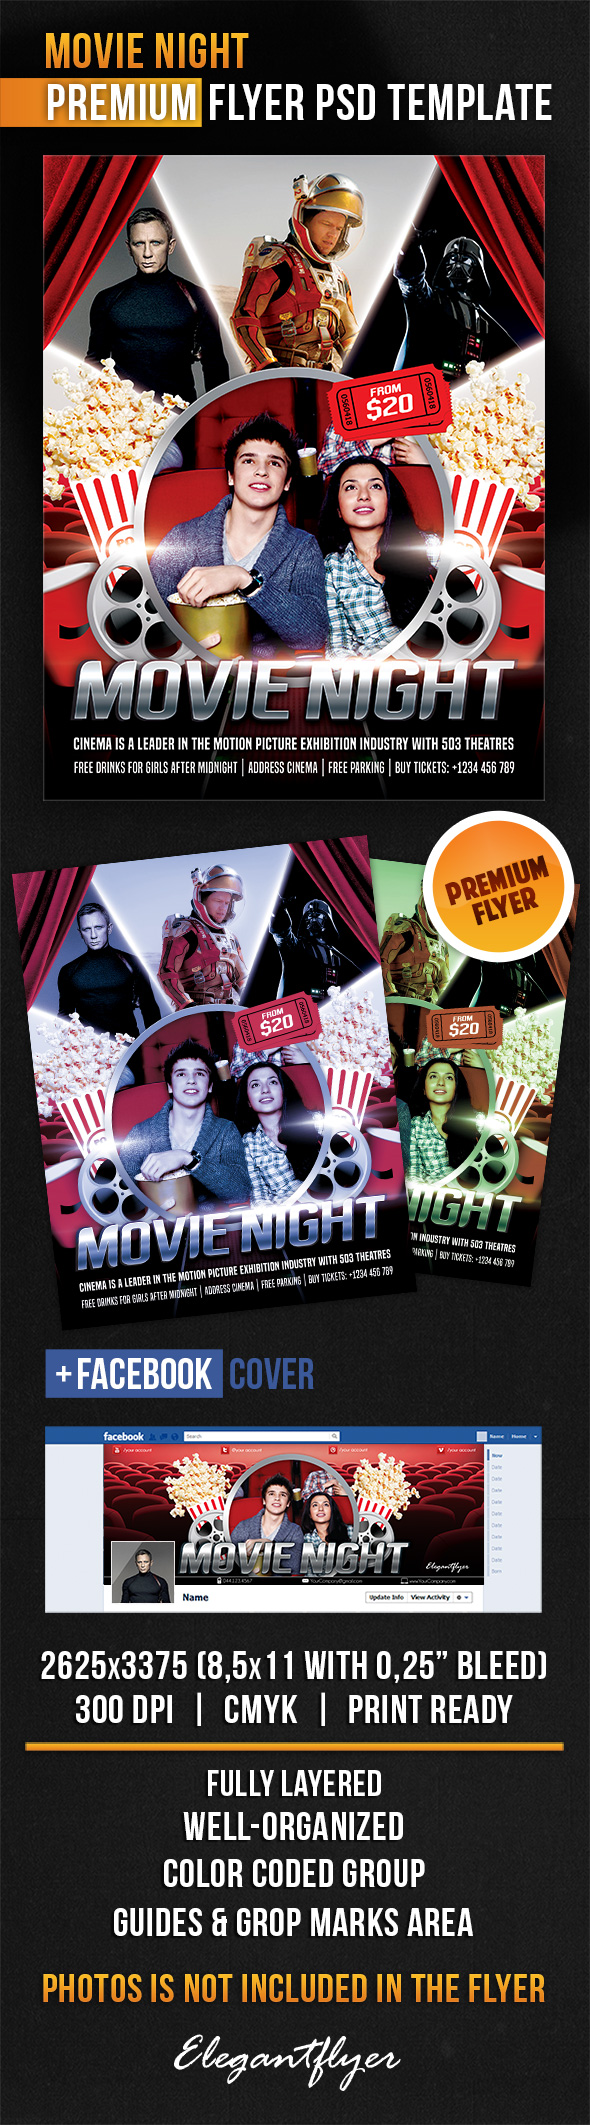 Movie Night Flyer Template Free